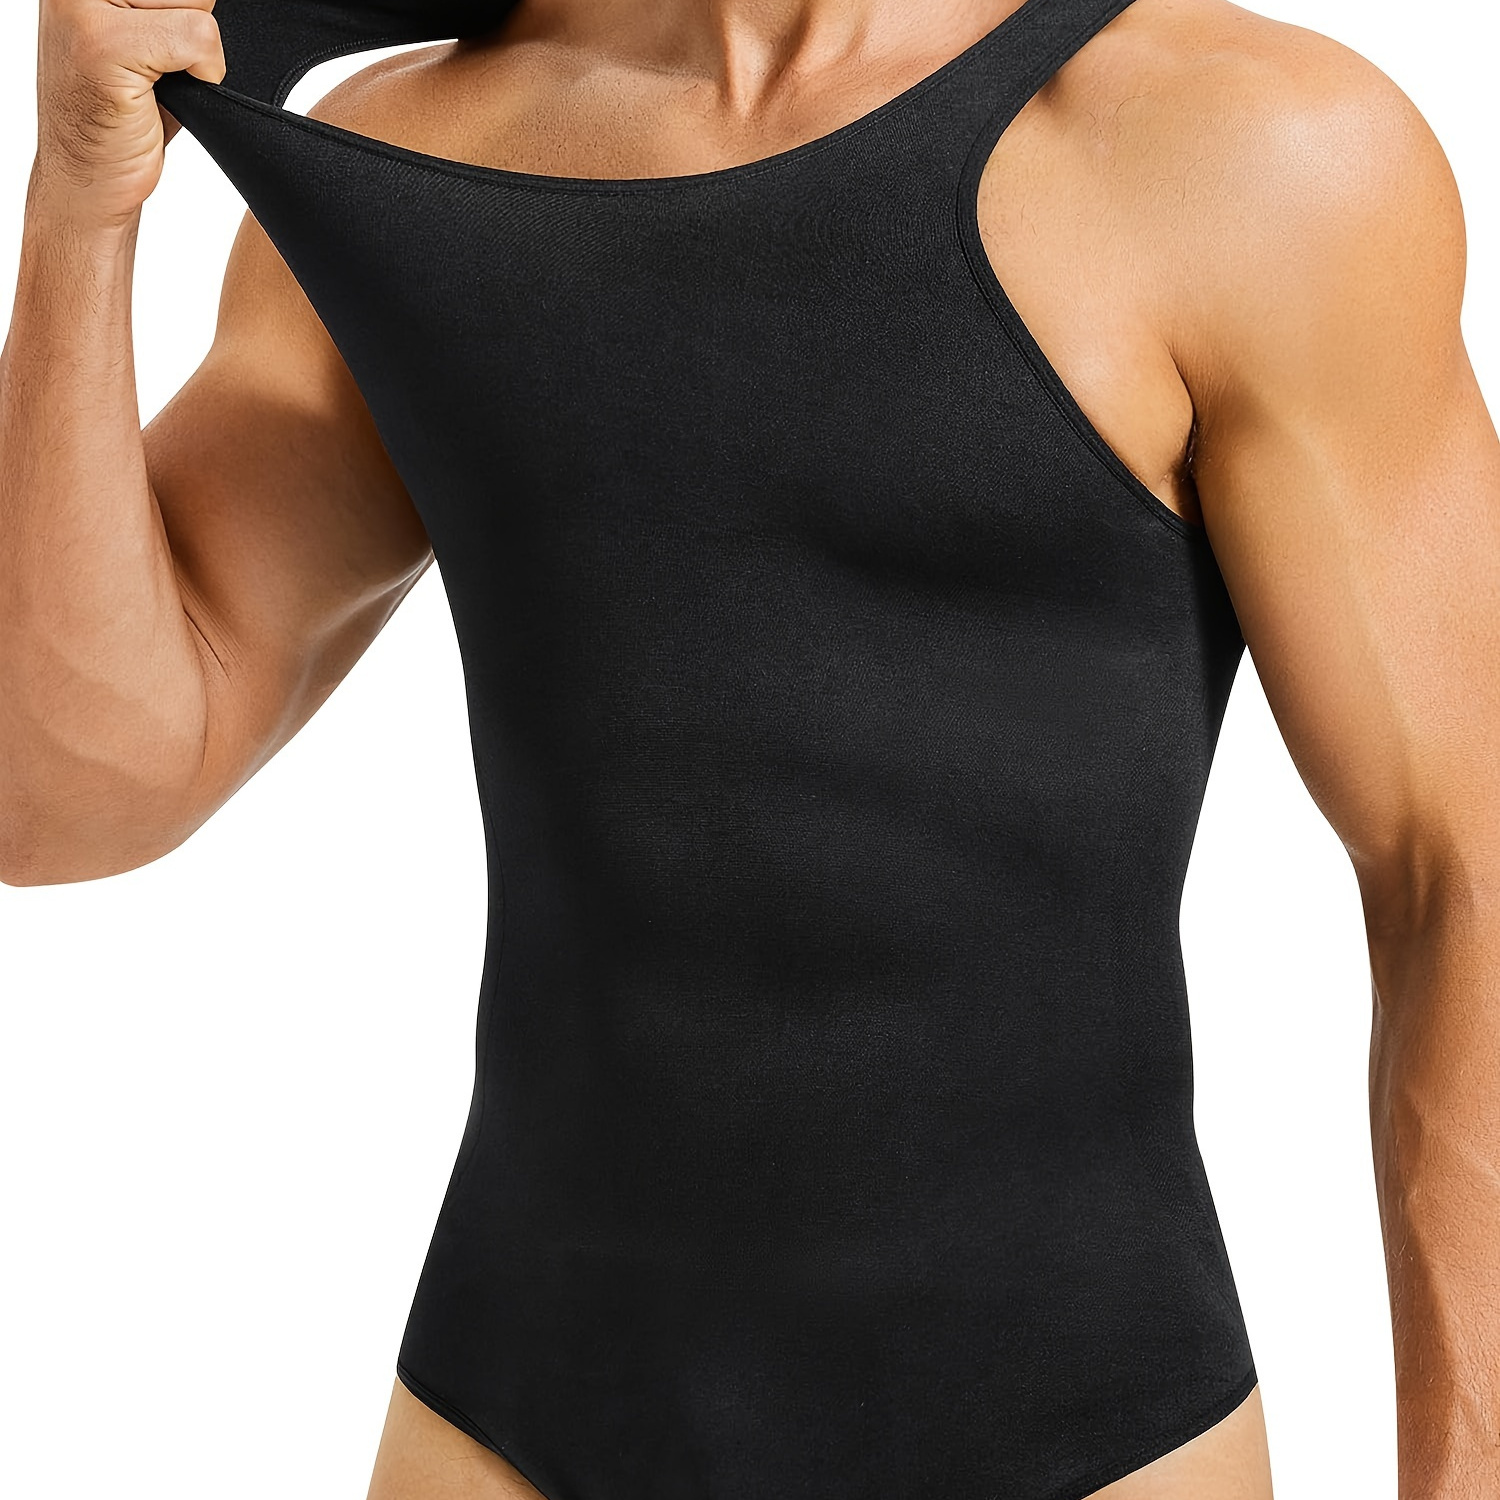 Men's Sports Compression Bodysuit, Skinny Fit Stretch Tank Top Body Shaper  Undershirt